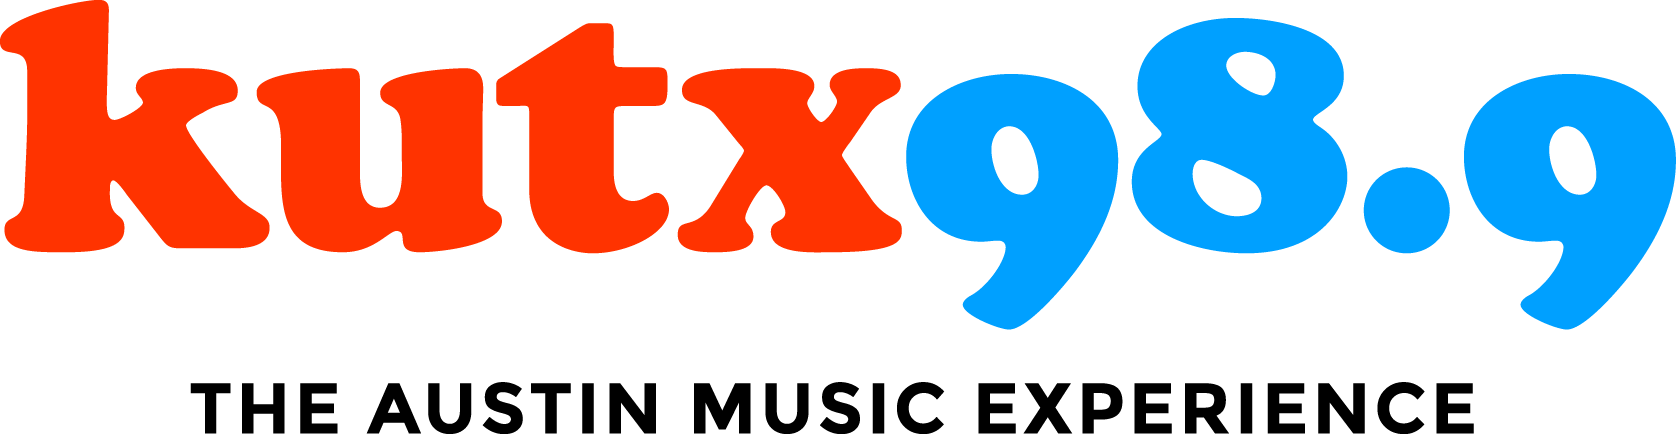 KUTX logo